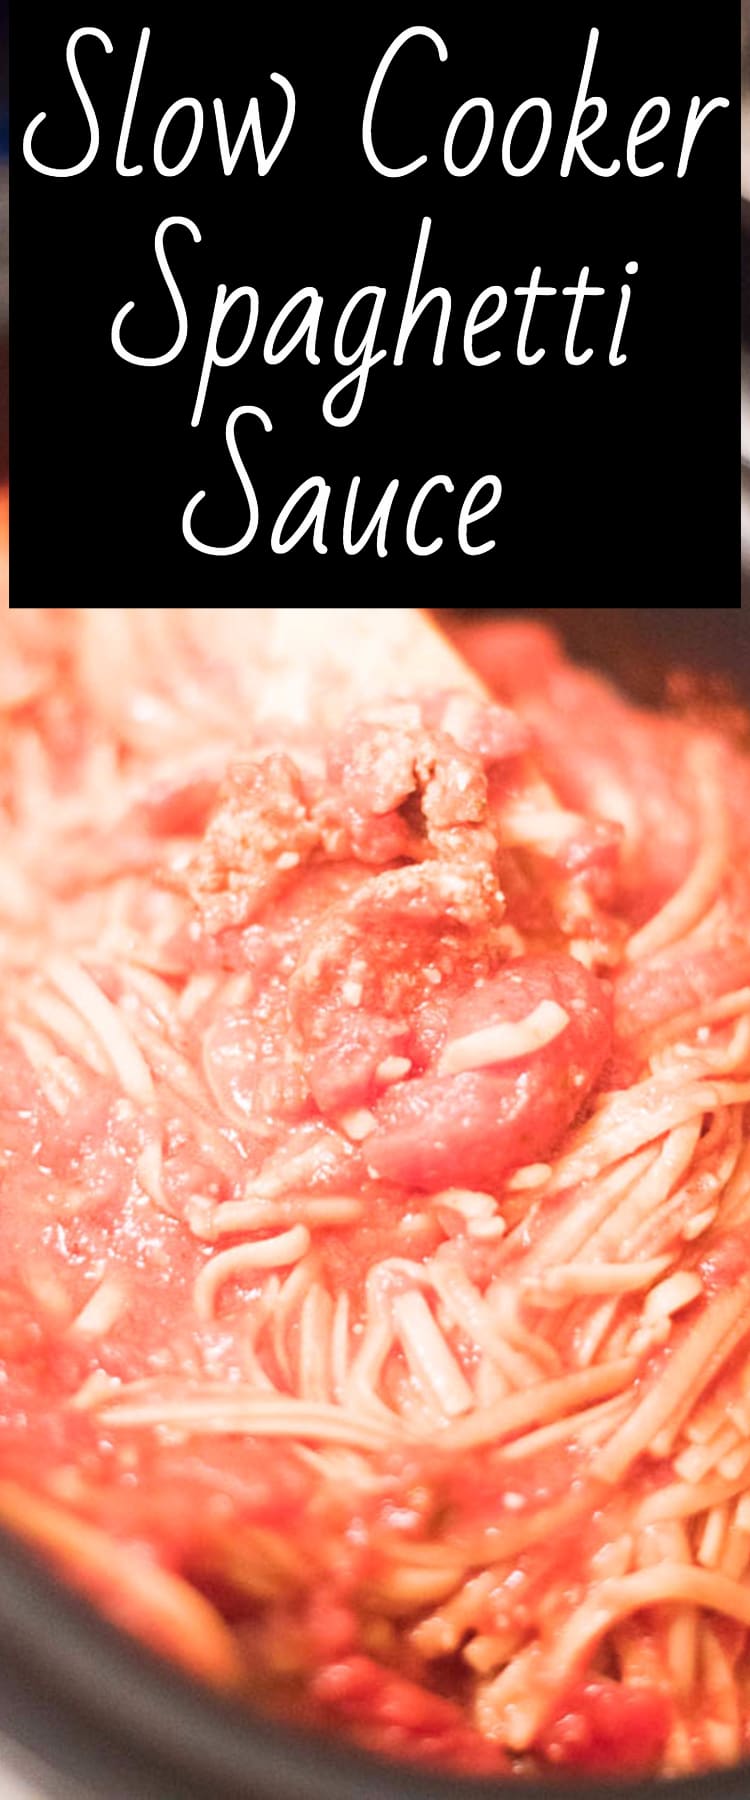 Slow Cooker Spaghetti Sauce / Crock Pot Spaghetti Sauce / #CrockPot #SlowCooker #EasyRecipe #dinnerrecipes #italian #spaghetti